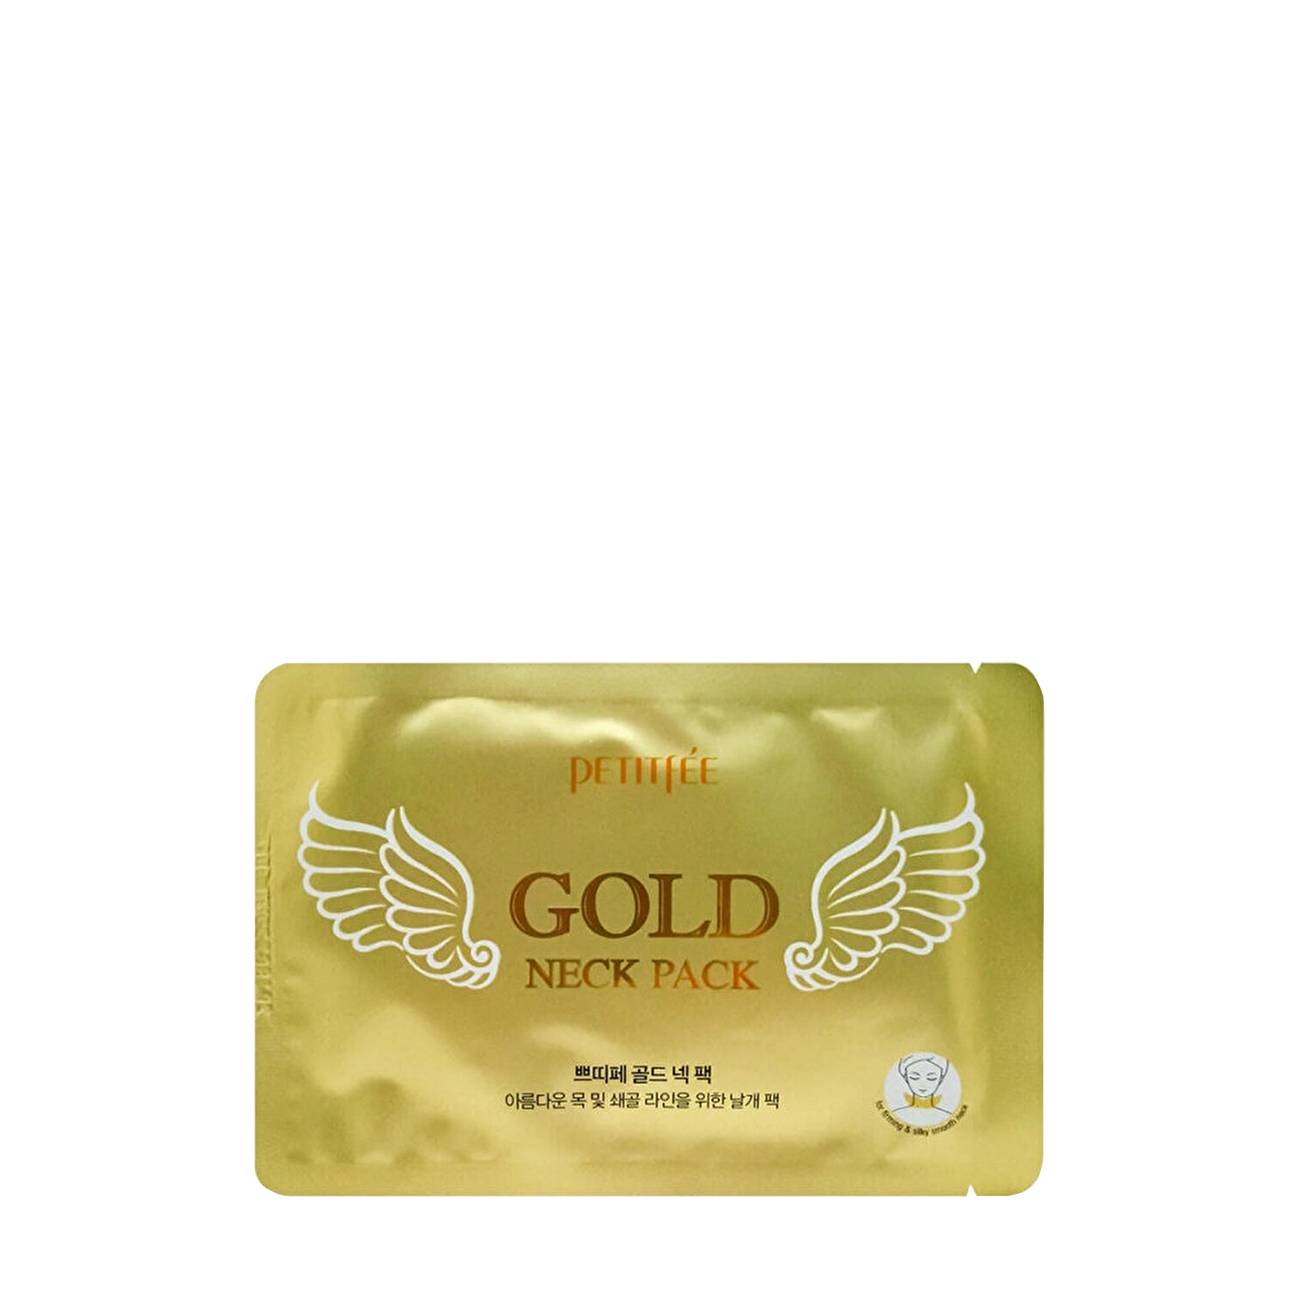 Gold Neck Patch 10 gr bestvalue